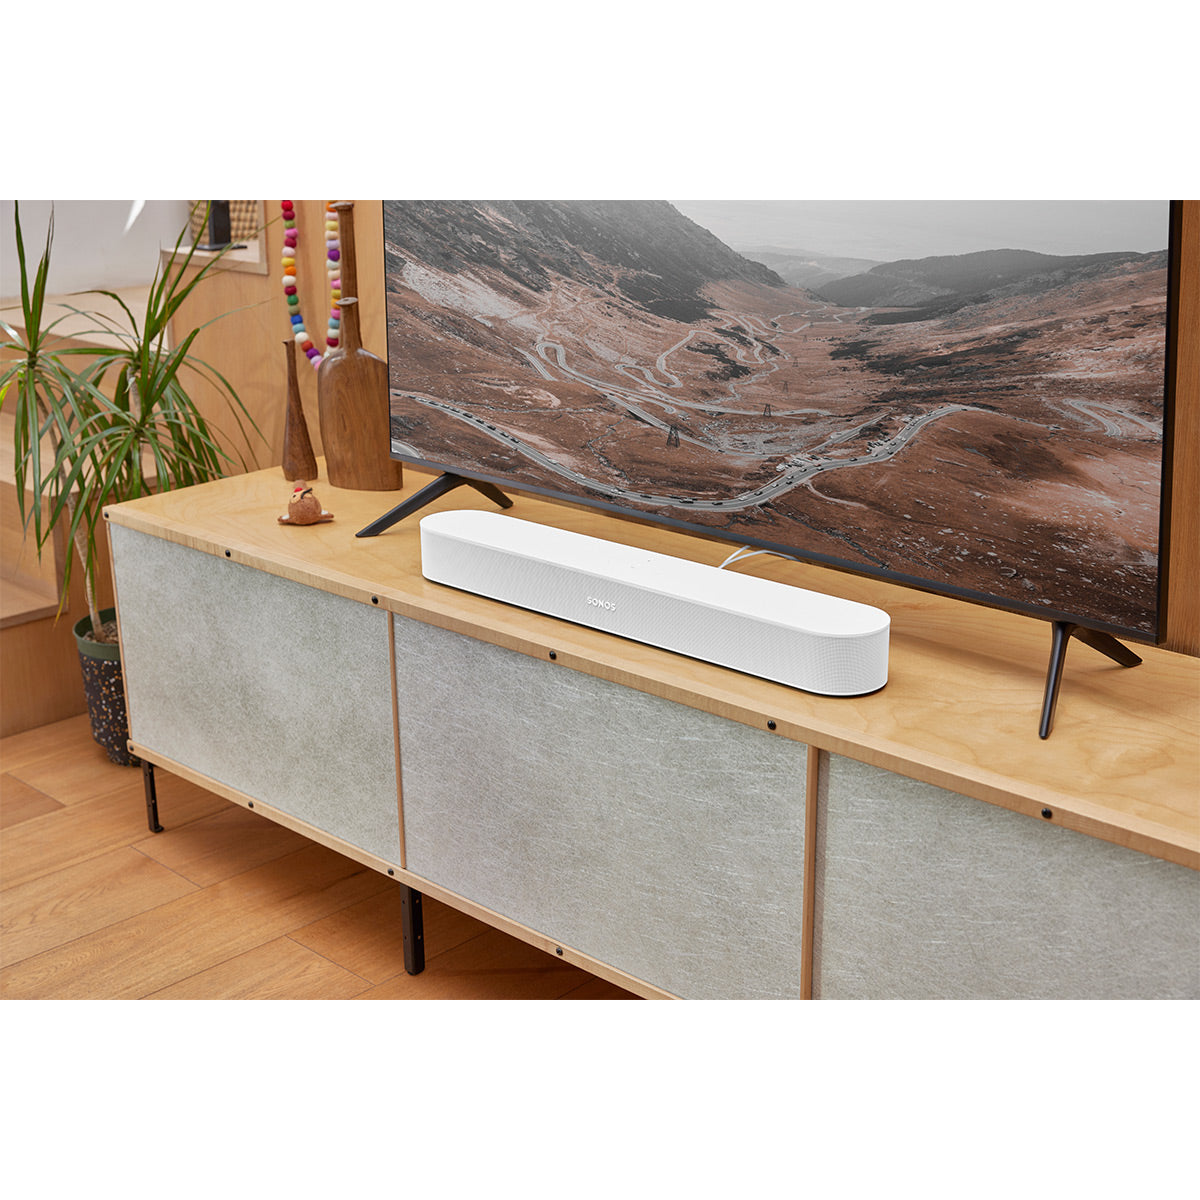 Sonos Surround Set with Beam (Gen 2) Soundbar and Pair of Era 100 Wireless Smart Speakers (White)